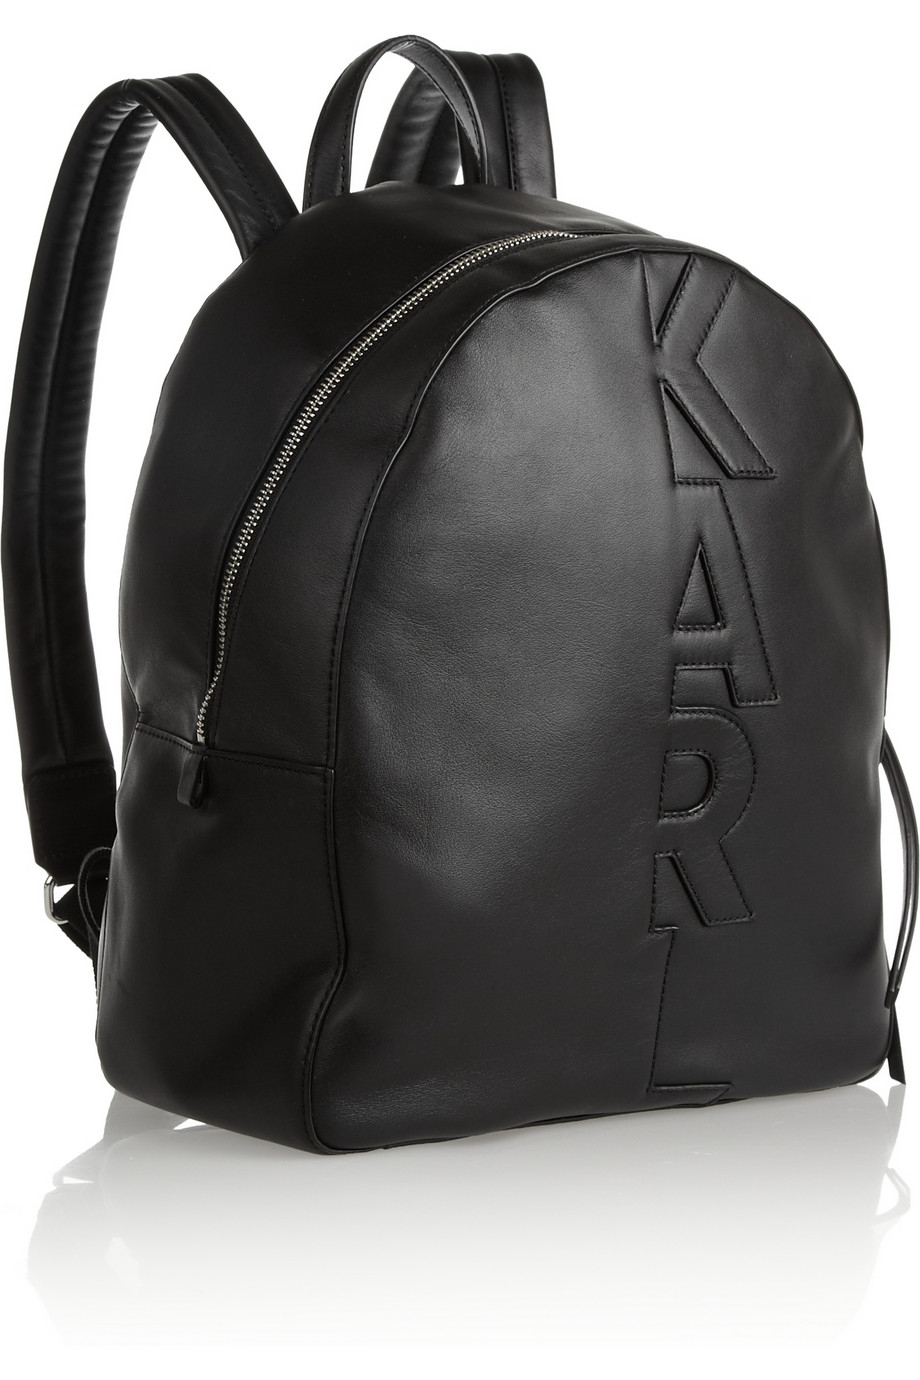 Lyst - Karl lagerfeld Appliquéd Leather Backpack in Black